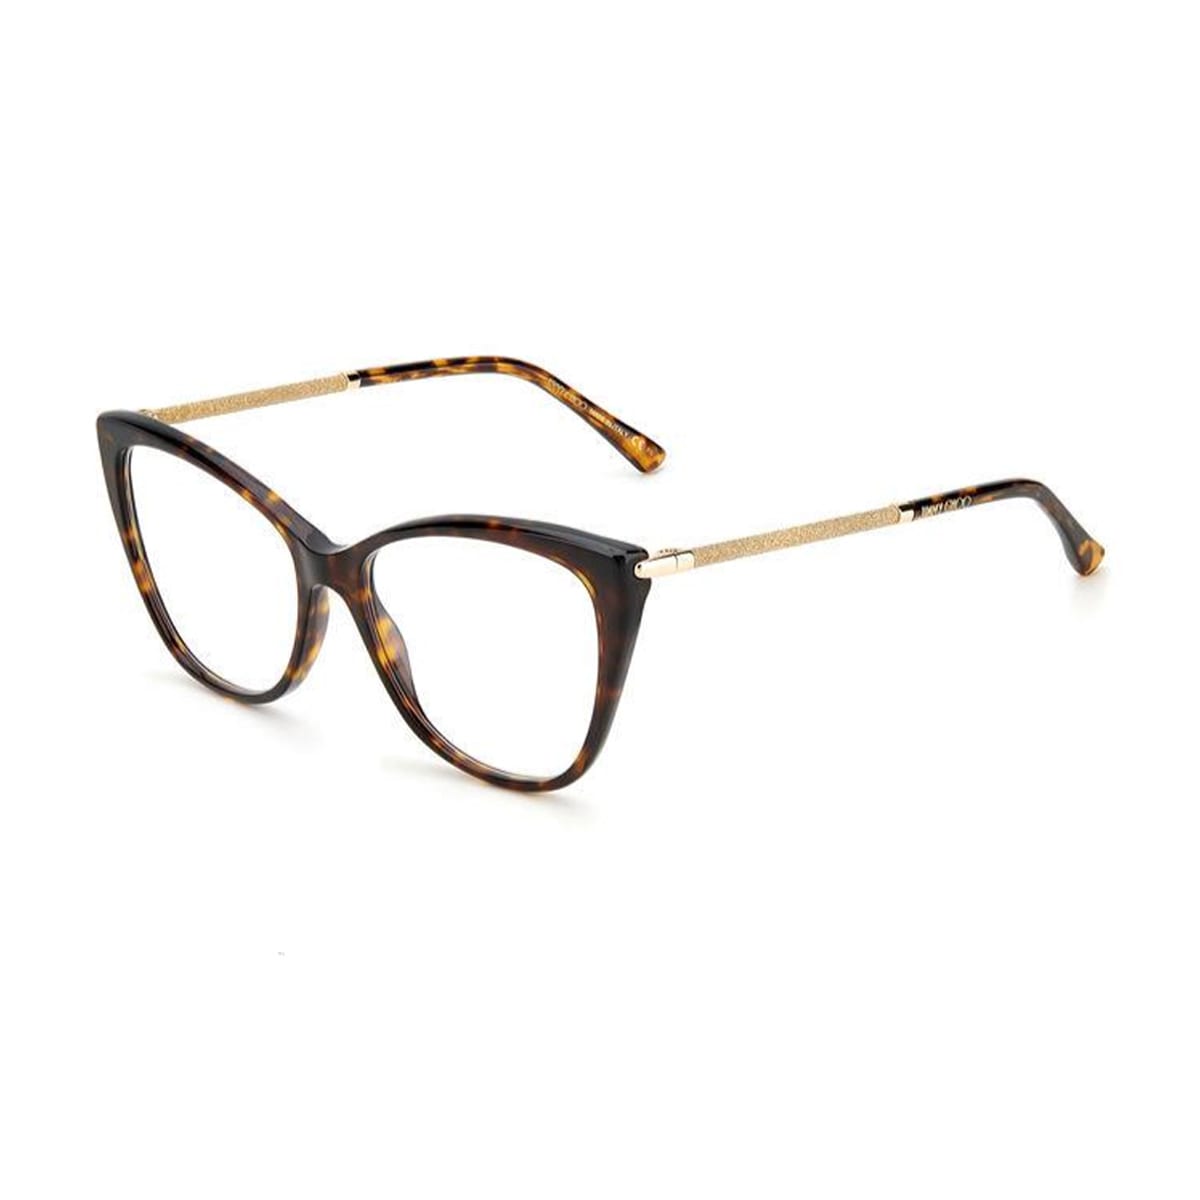 Jimmy Choo Eyewear Jc331 086/16 Glasses